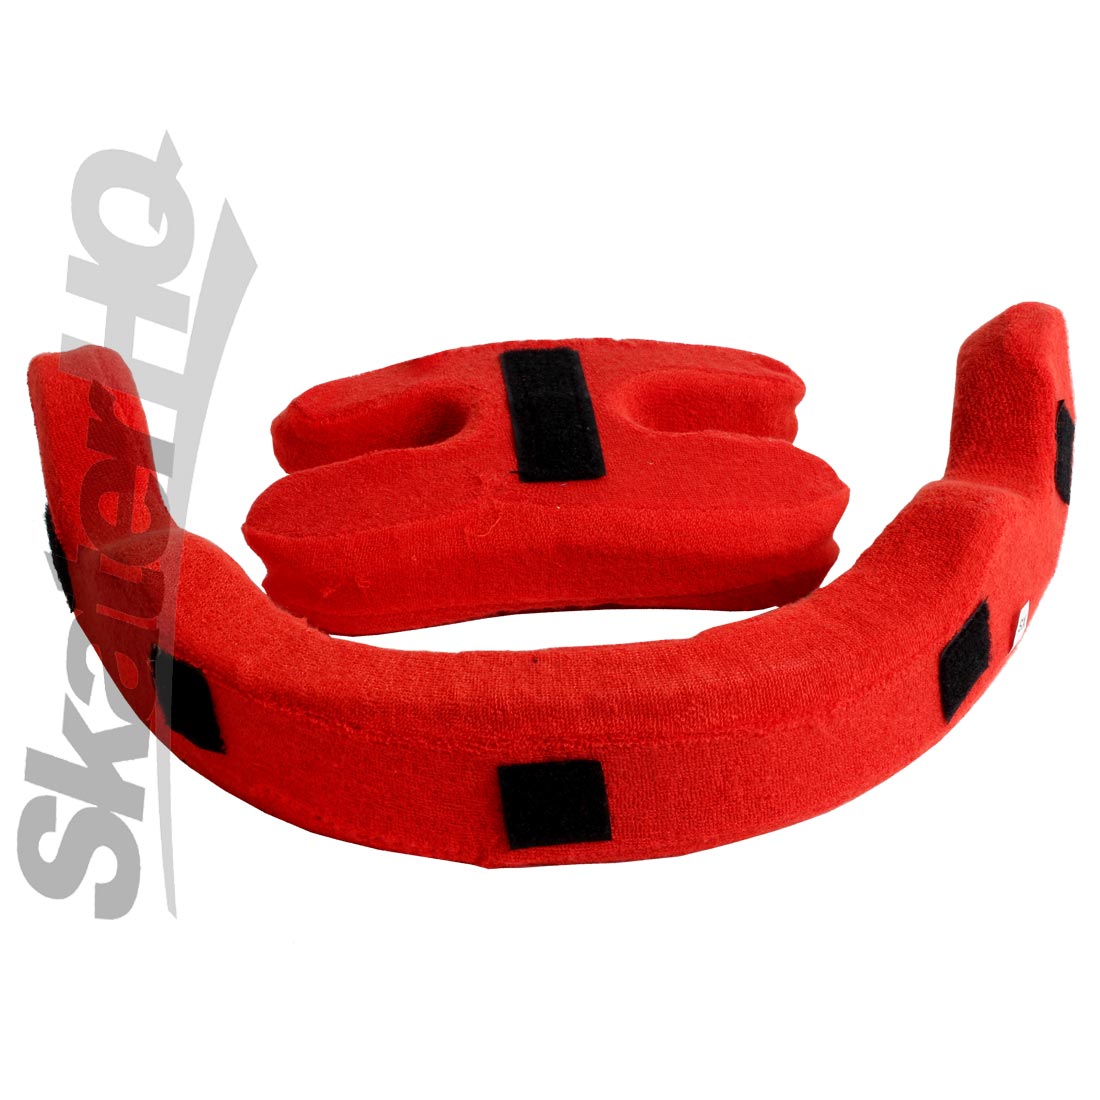 Triple 8 Sweatsaver Liner - Red - S Helmet liners